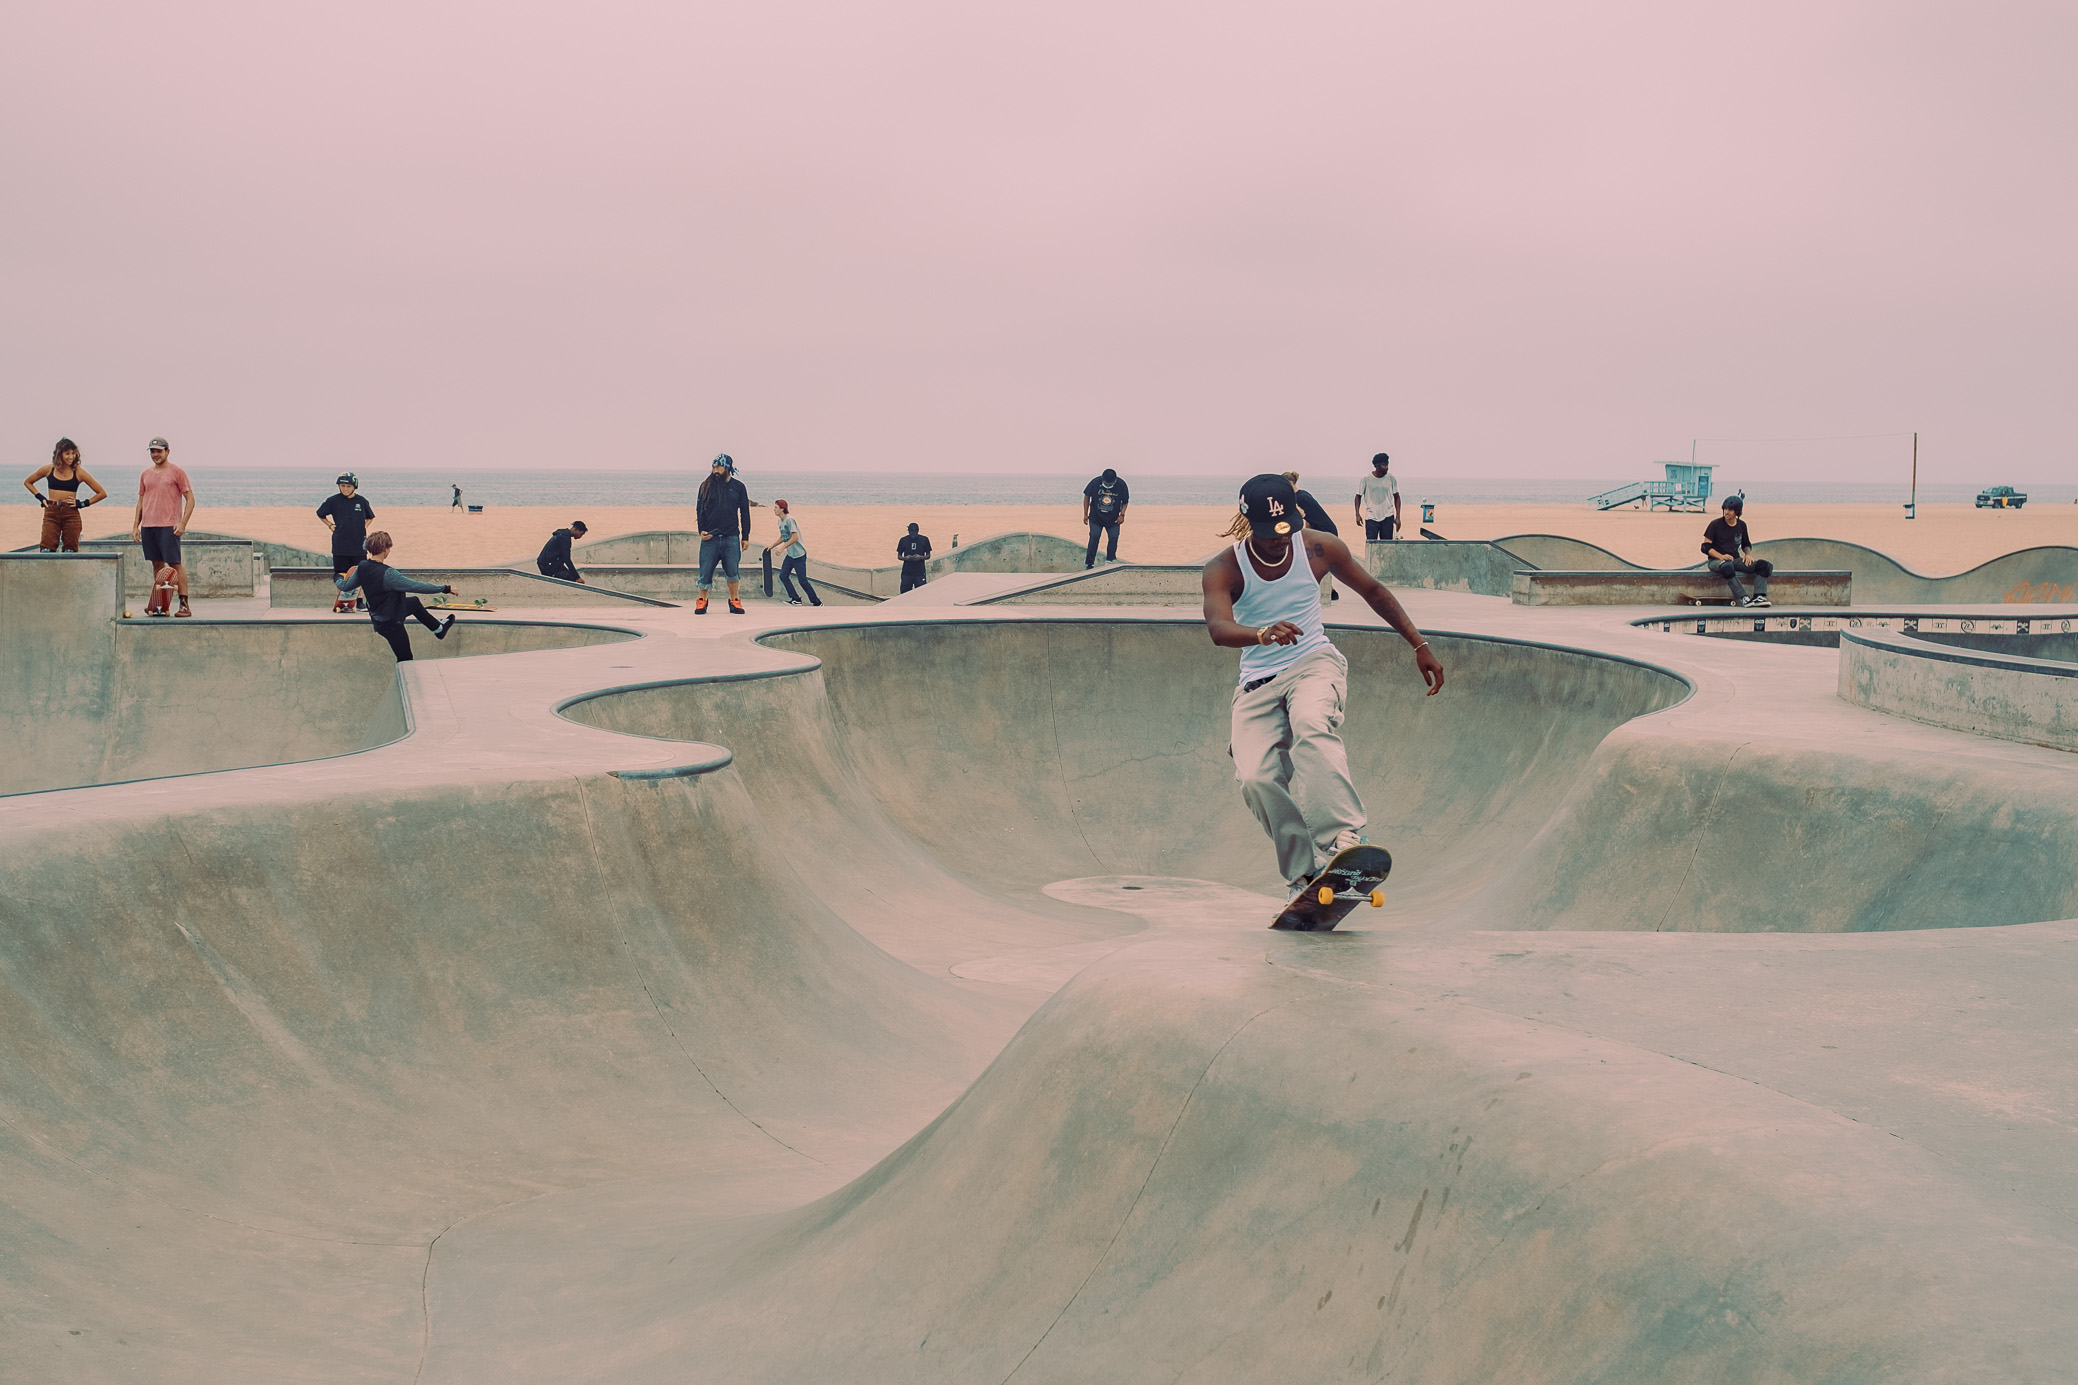 Skate Park | Venice Beach, California | September 3rd, 2021